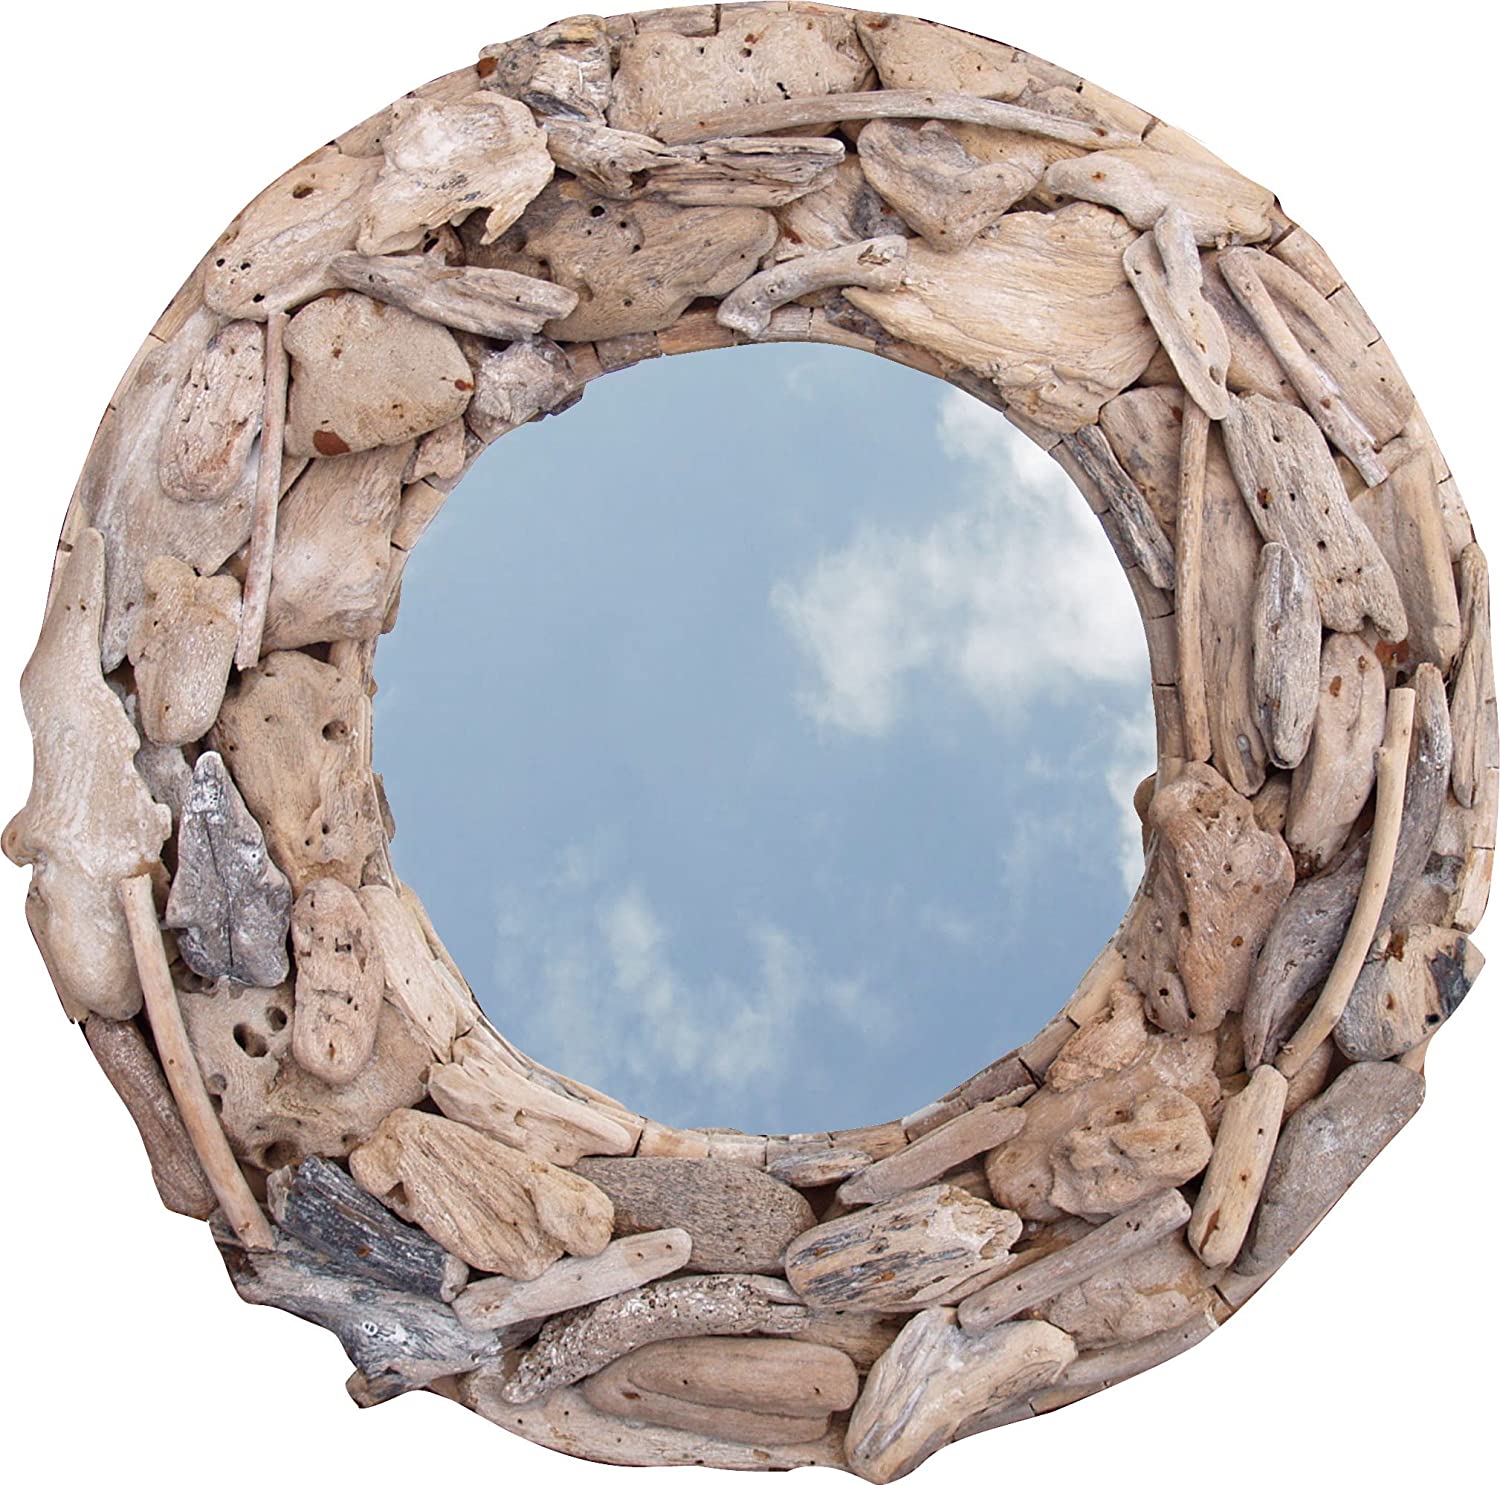 Guru Store flotsam round Mirror, 50 x 50 x 5 cm, Mirror Made from Wood